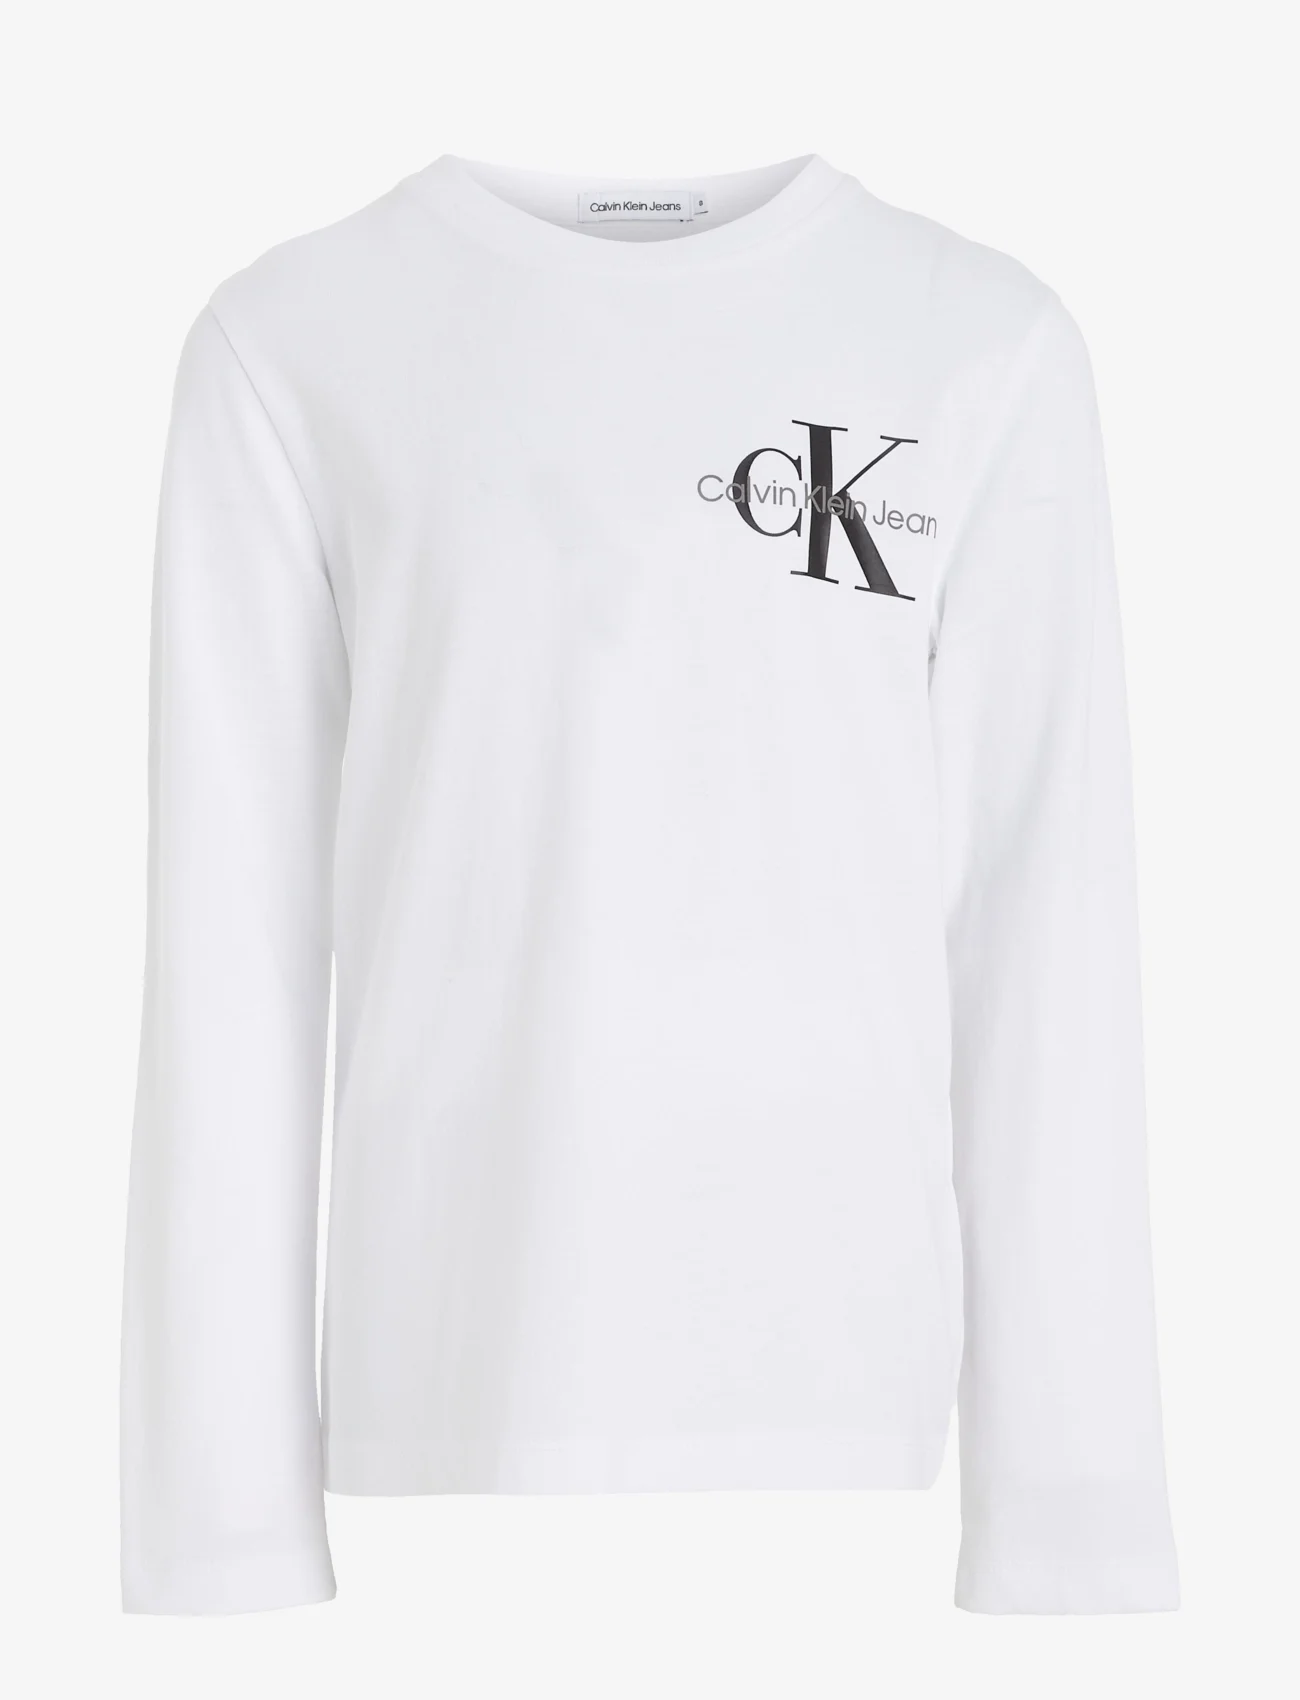 Calvin Klein - CHEST MONOGRAM LS TOP - pitkähihaiset t-paidat - bright white - 0